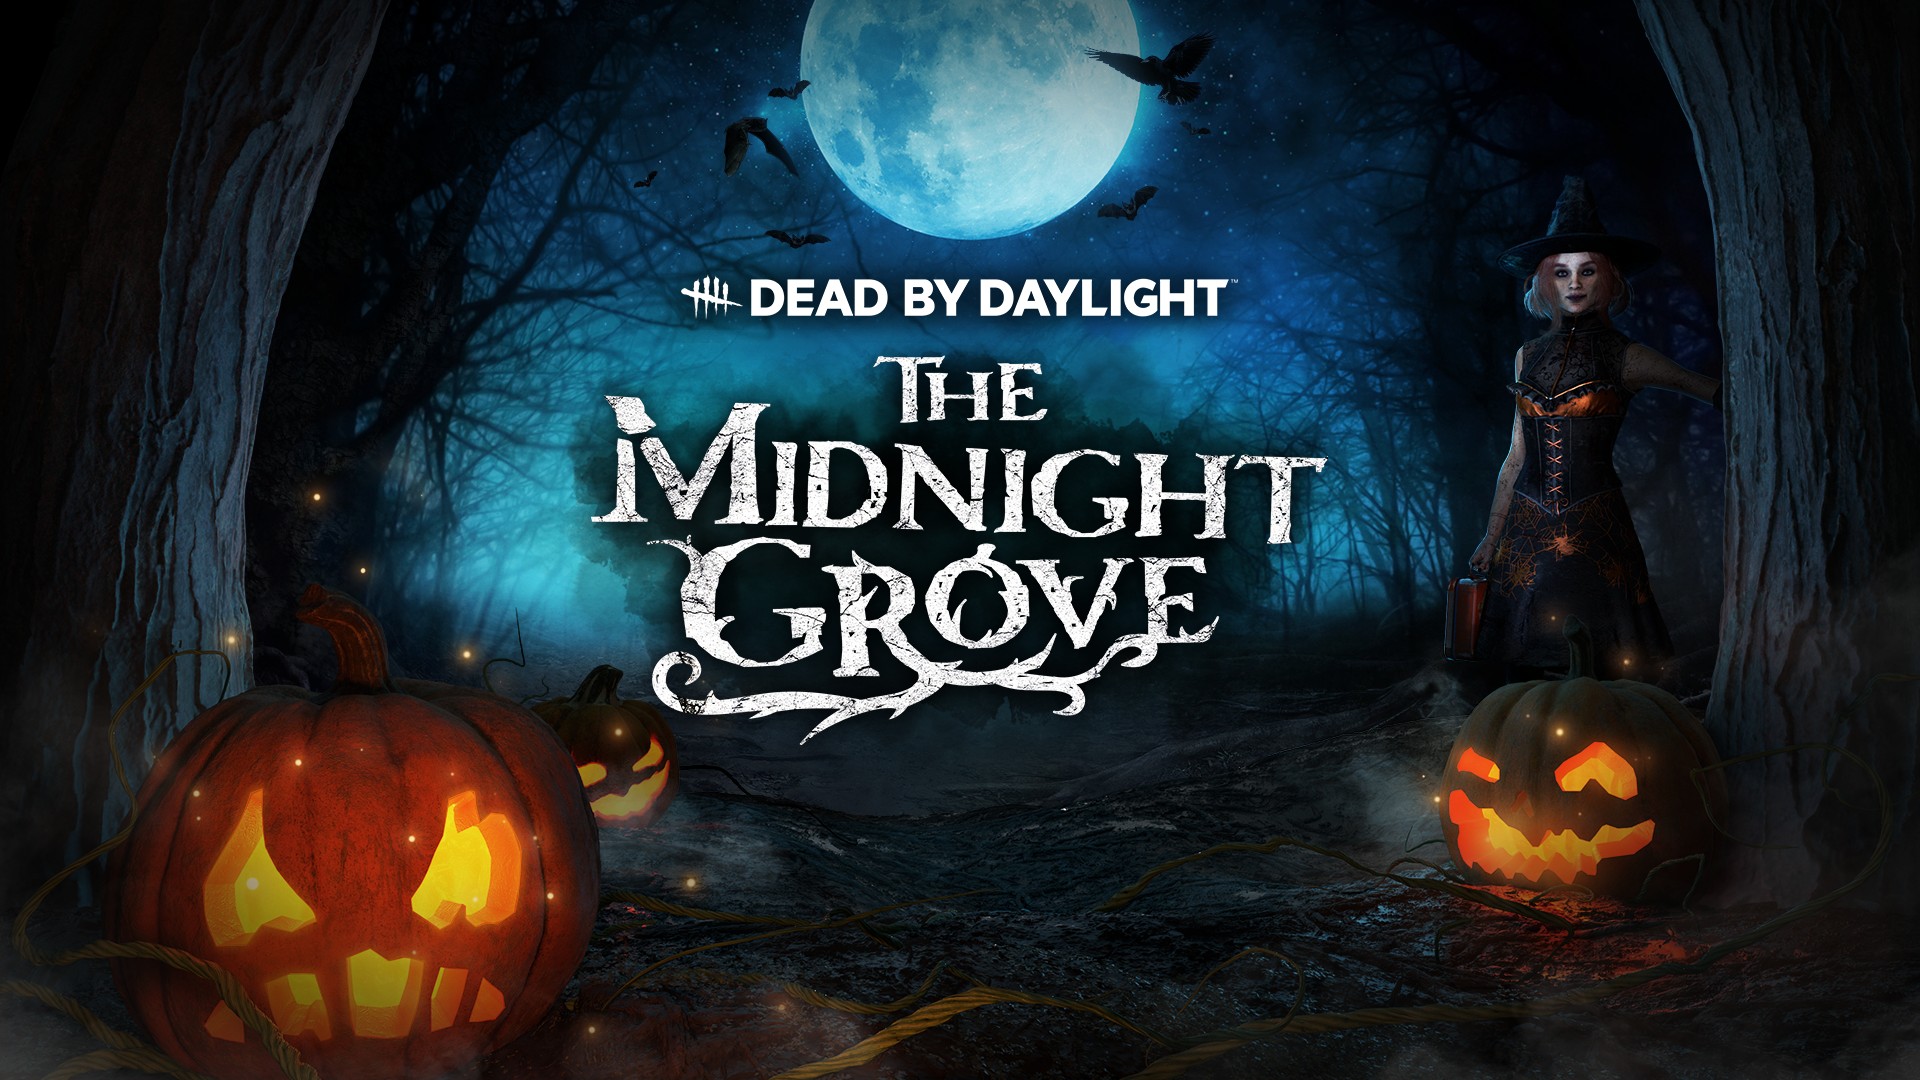 Dead by Daylight - Midnight Grove